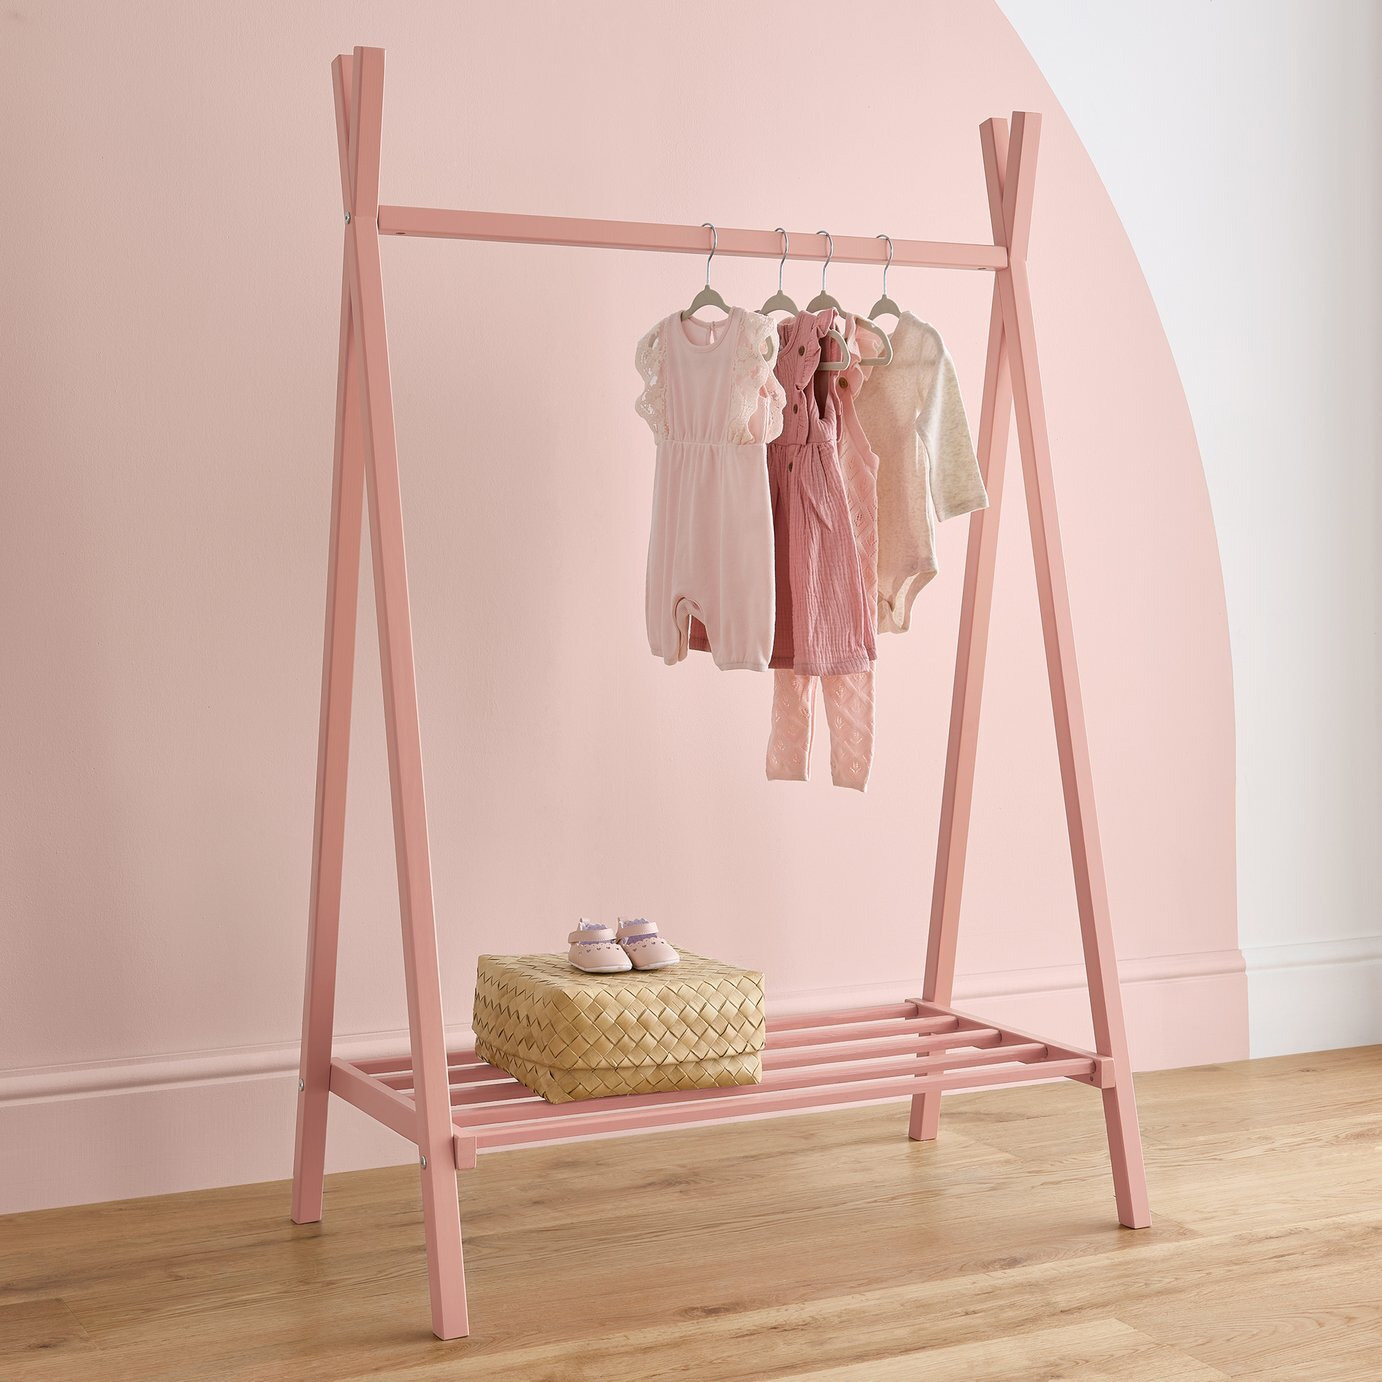 Cuddleco Nola Clothes Rail - Pink - image 1